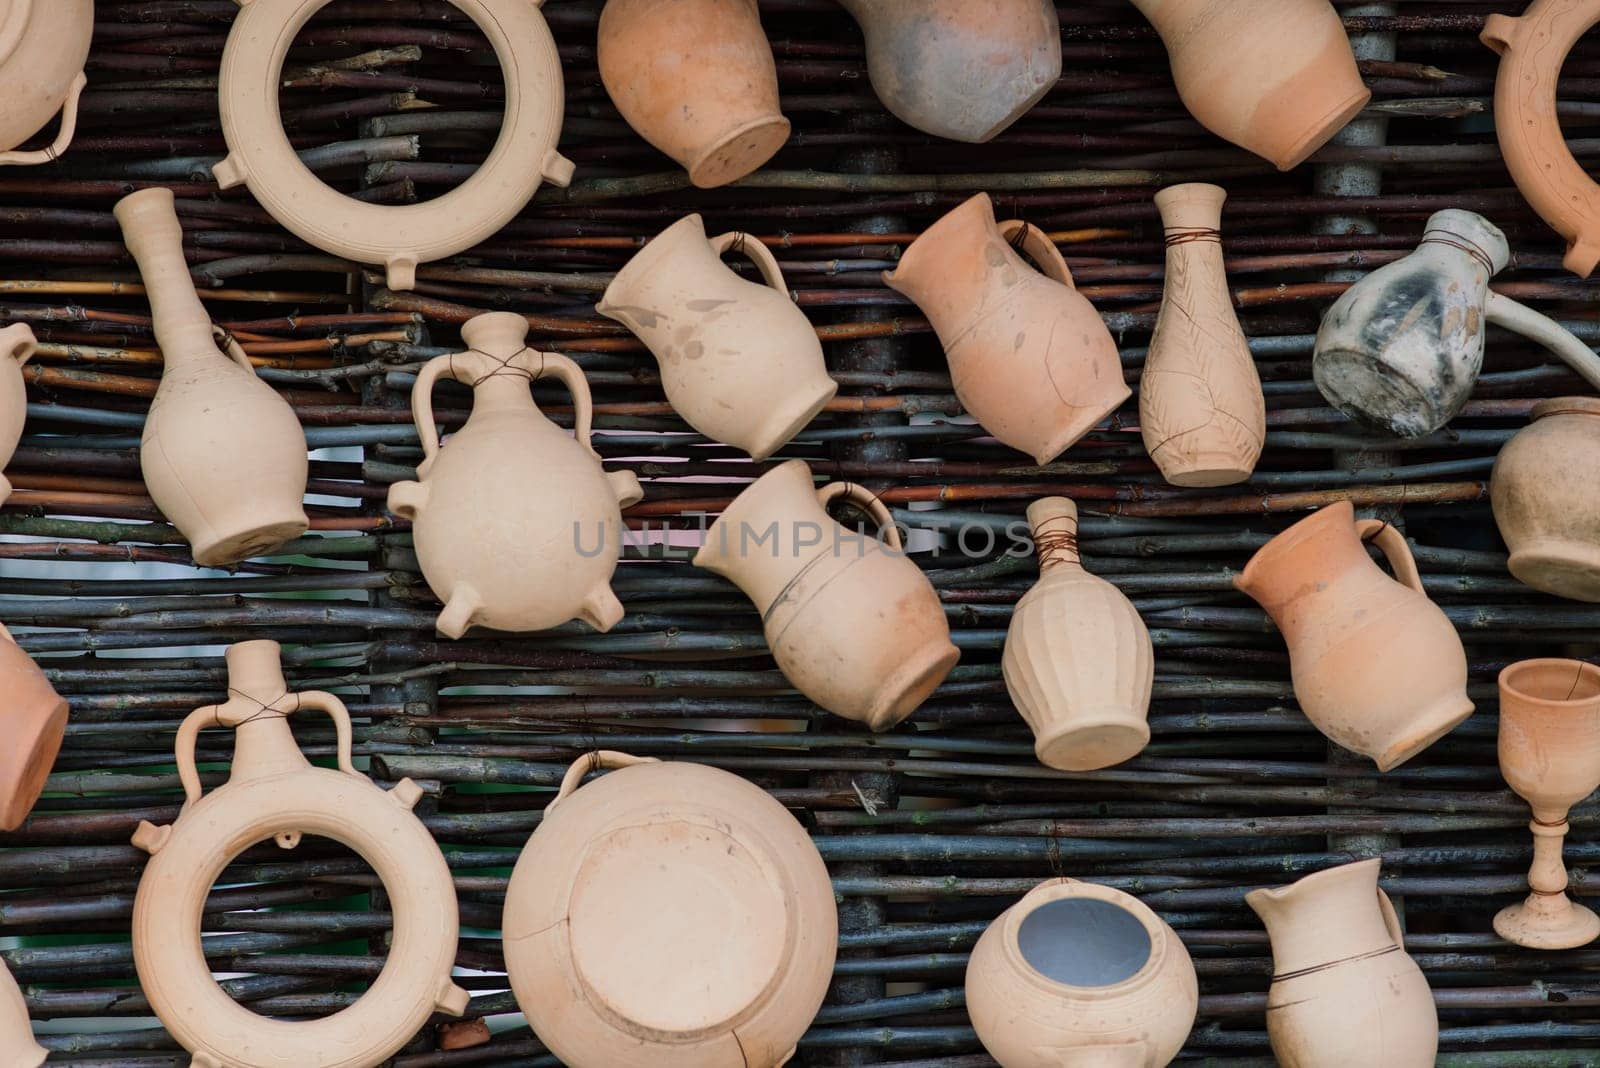 Ceramic clay terracotta jug, pot, vase, kitchen souvenirs in handmade ceramics street store.